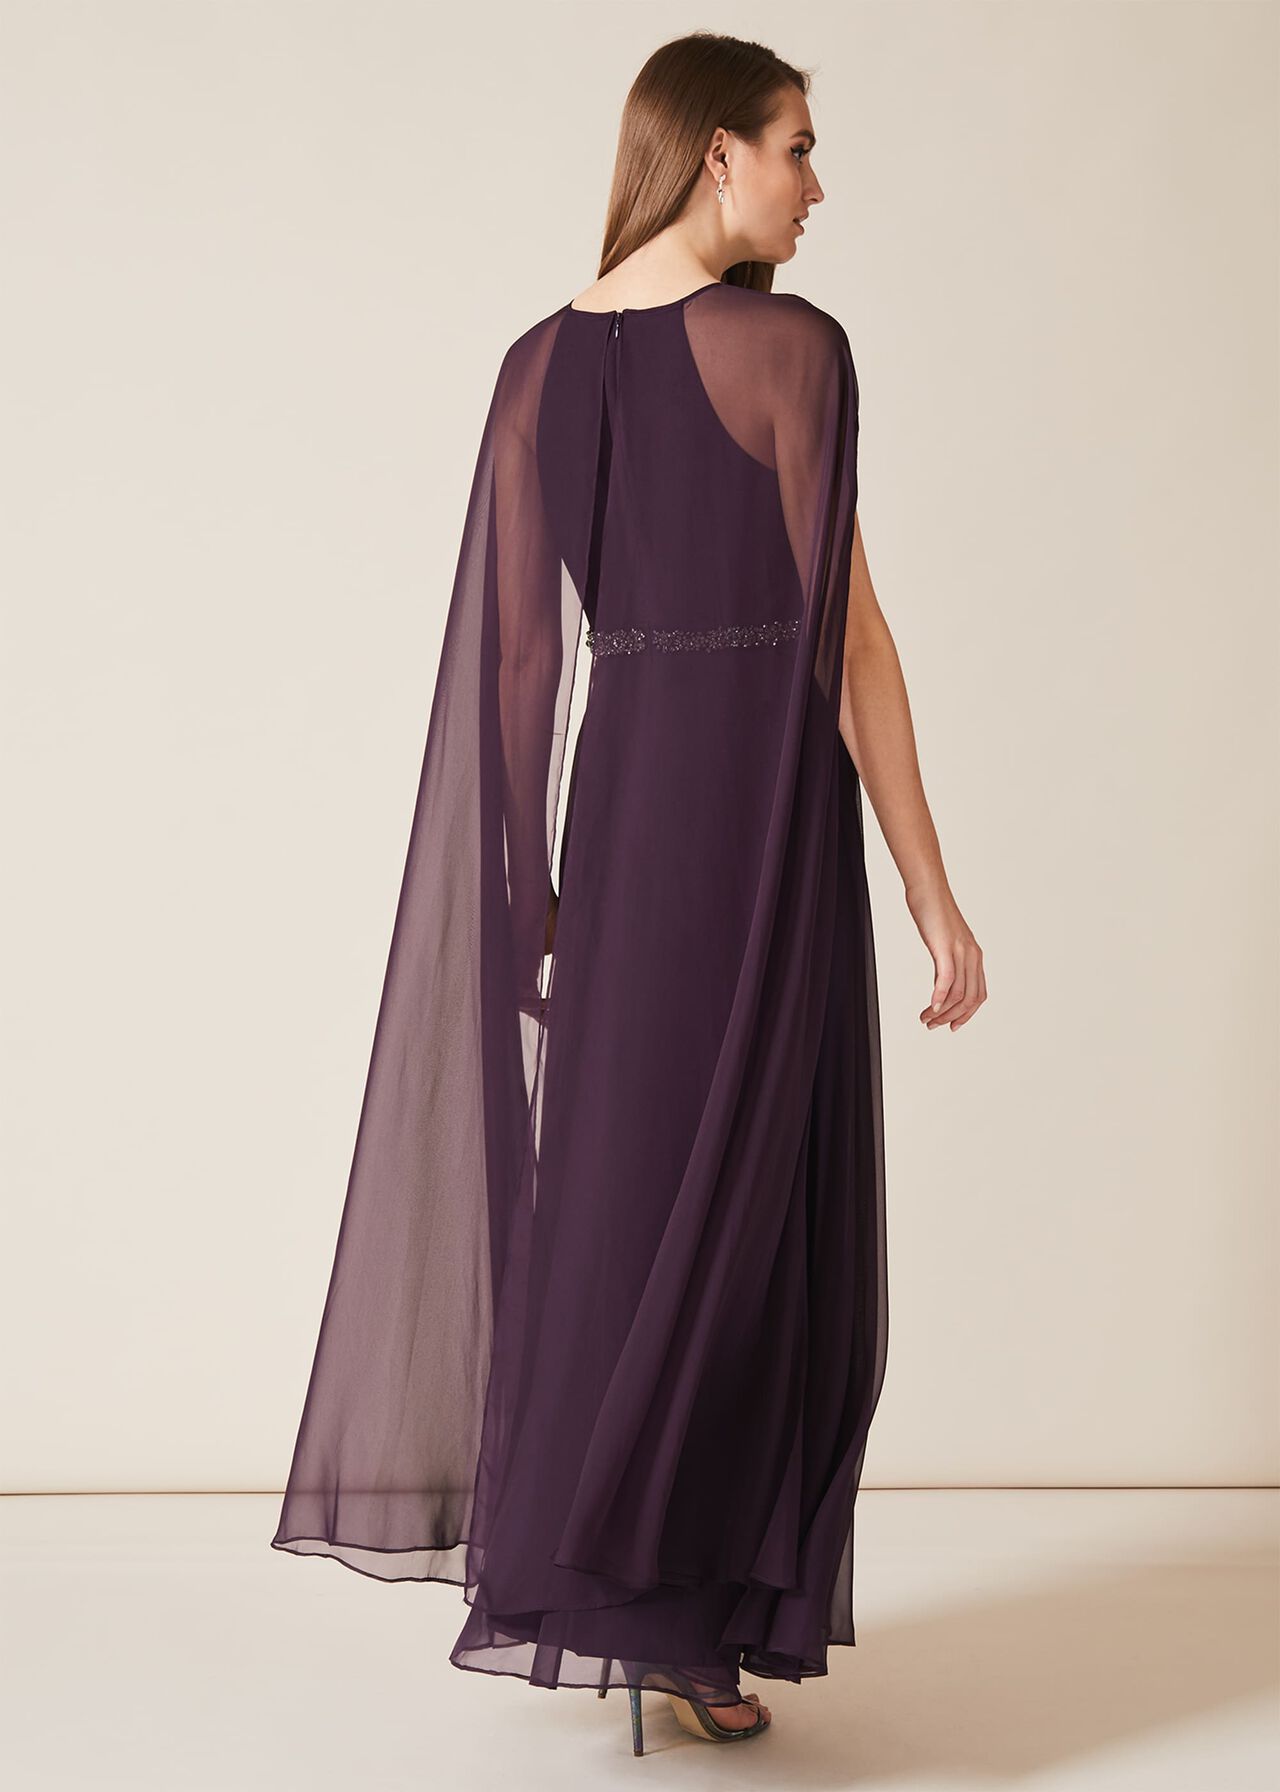 Samira Cape Beaded Dress | Phase Eight